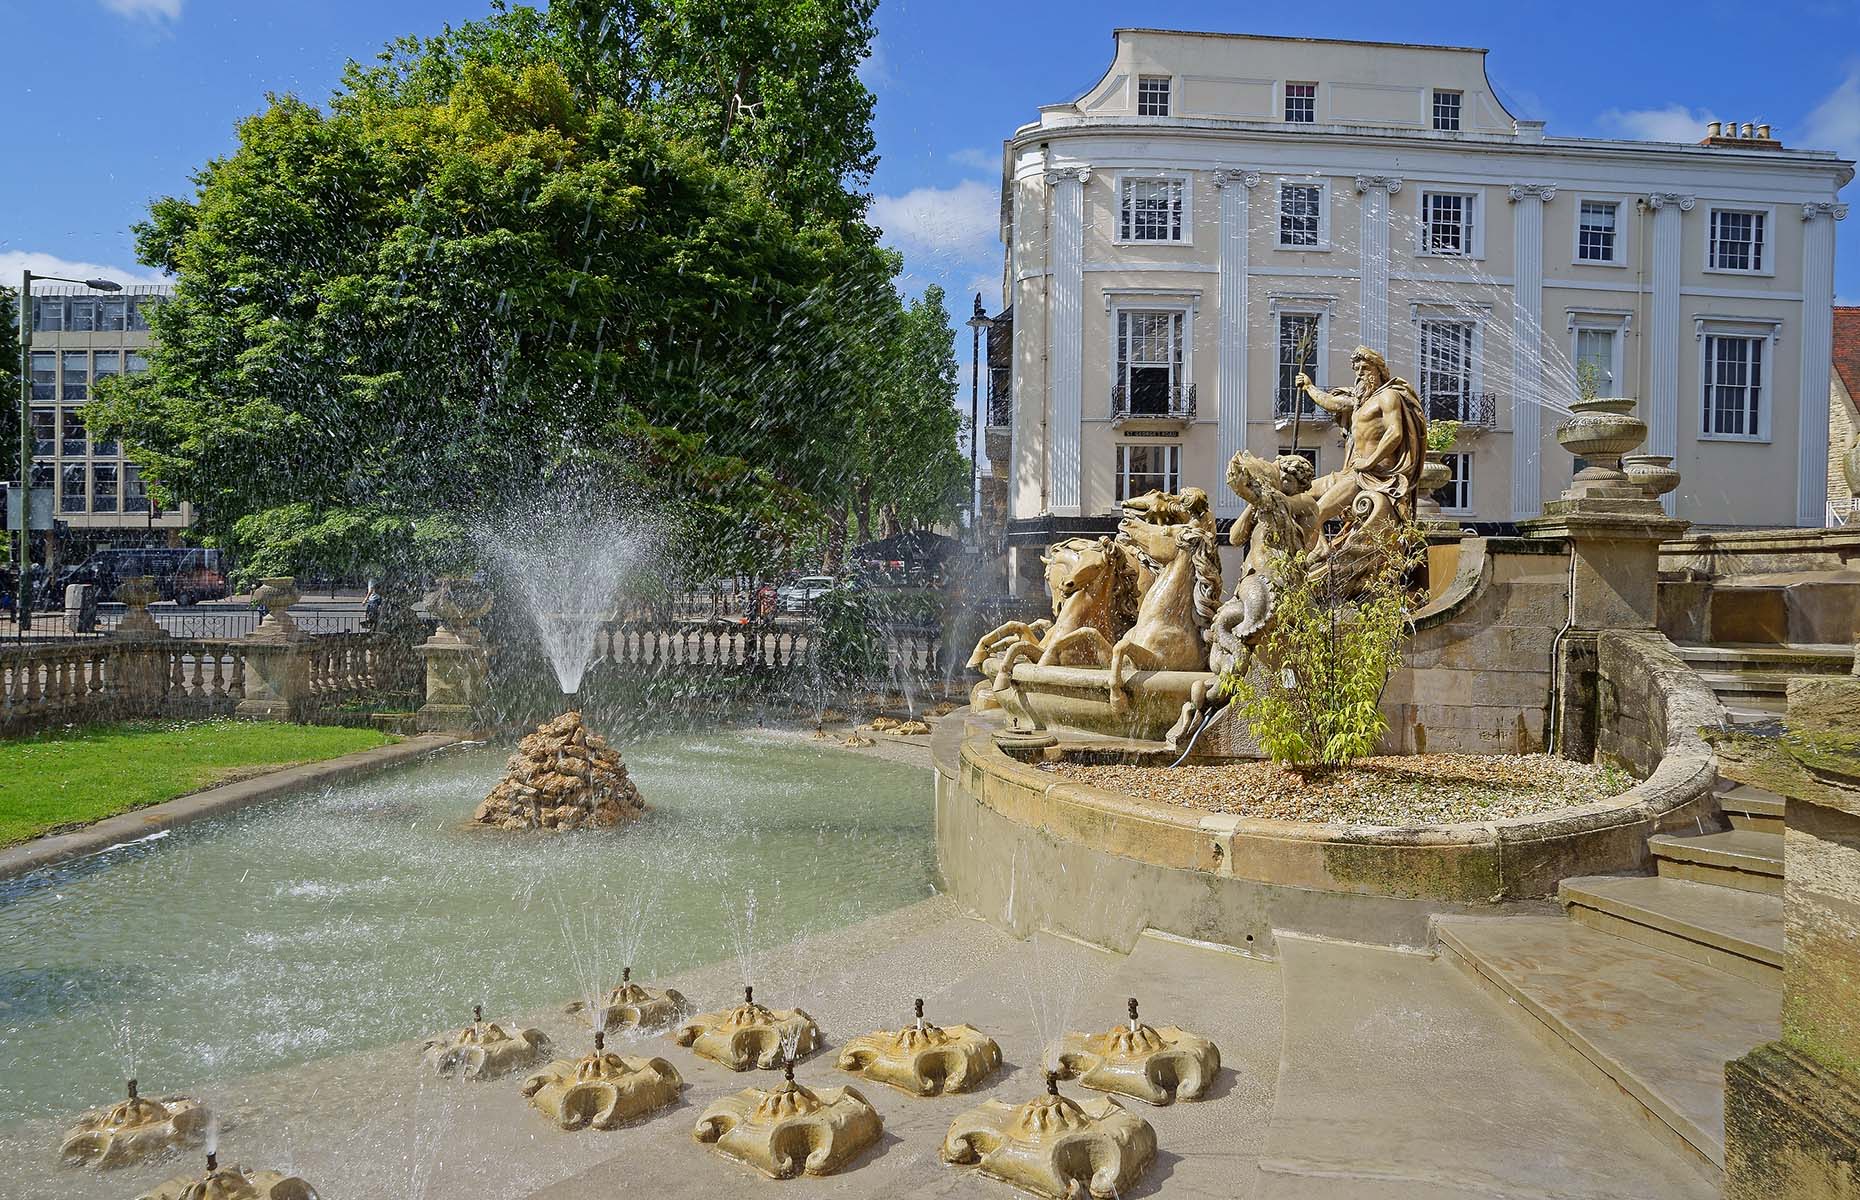 Neptune Fountain in Cheltenham (Image: PJ photography/Shutterstock)